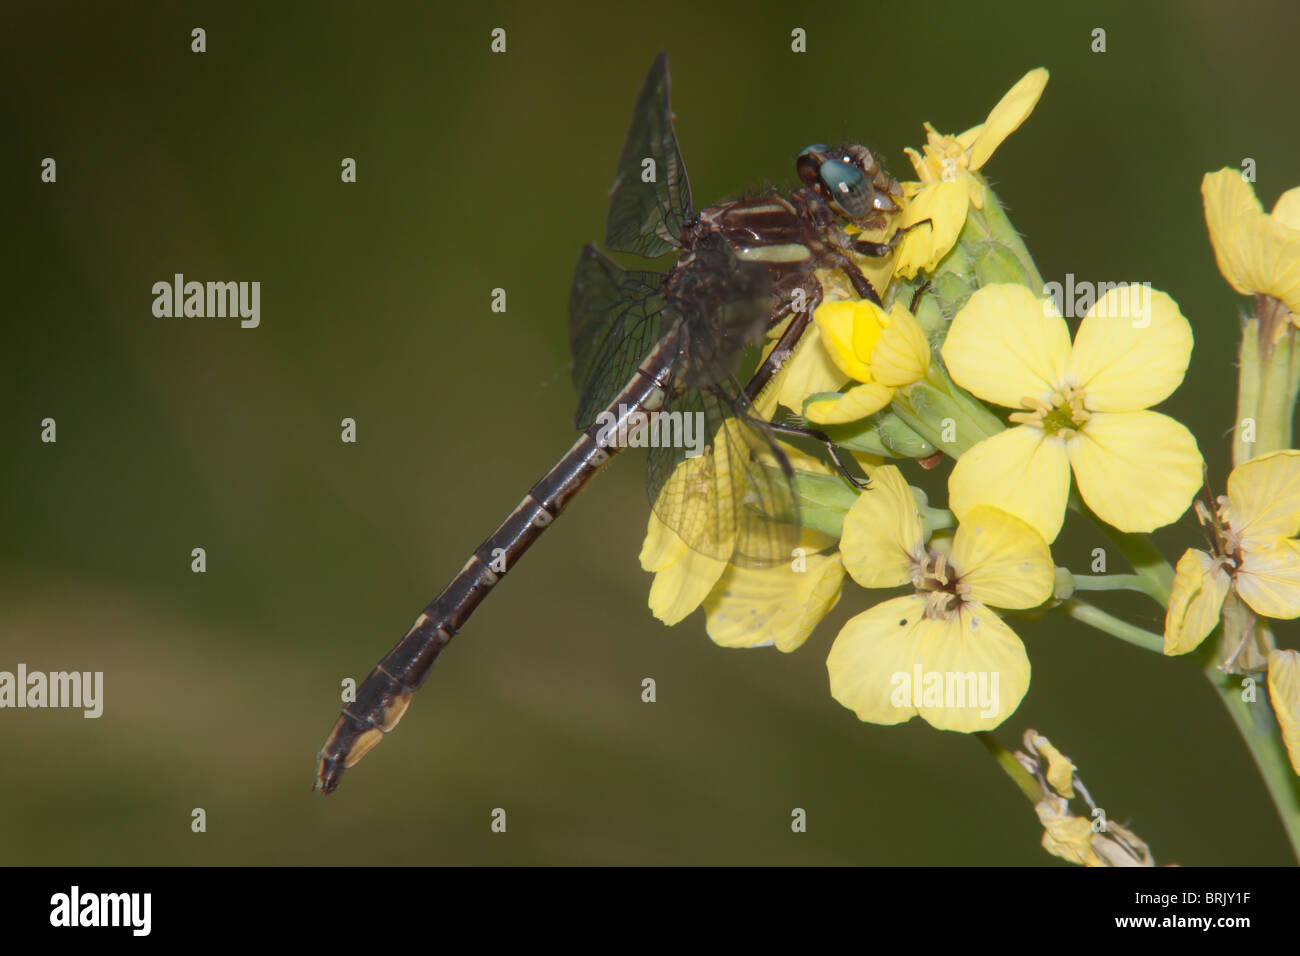 Lancet Clubtail (Phanogomphus exilis) Dragonfly - Hembra Foto de stock